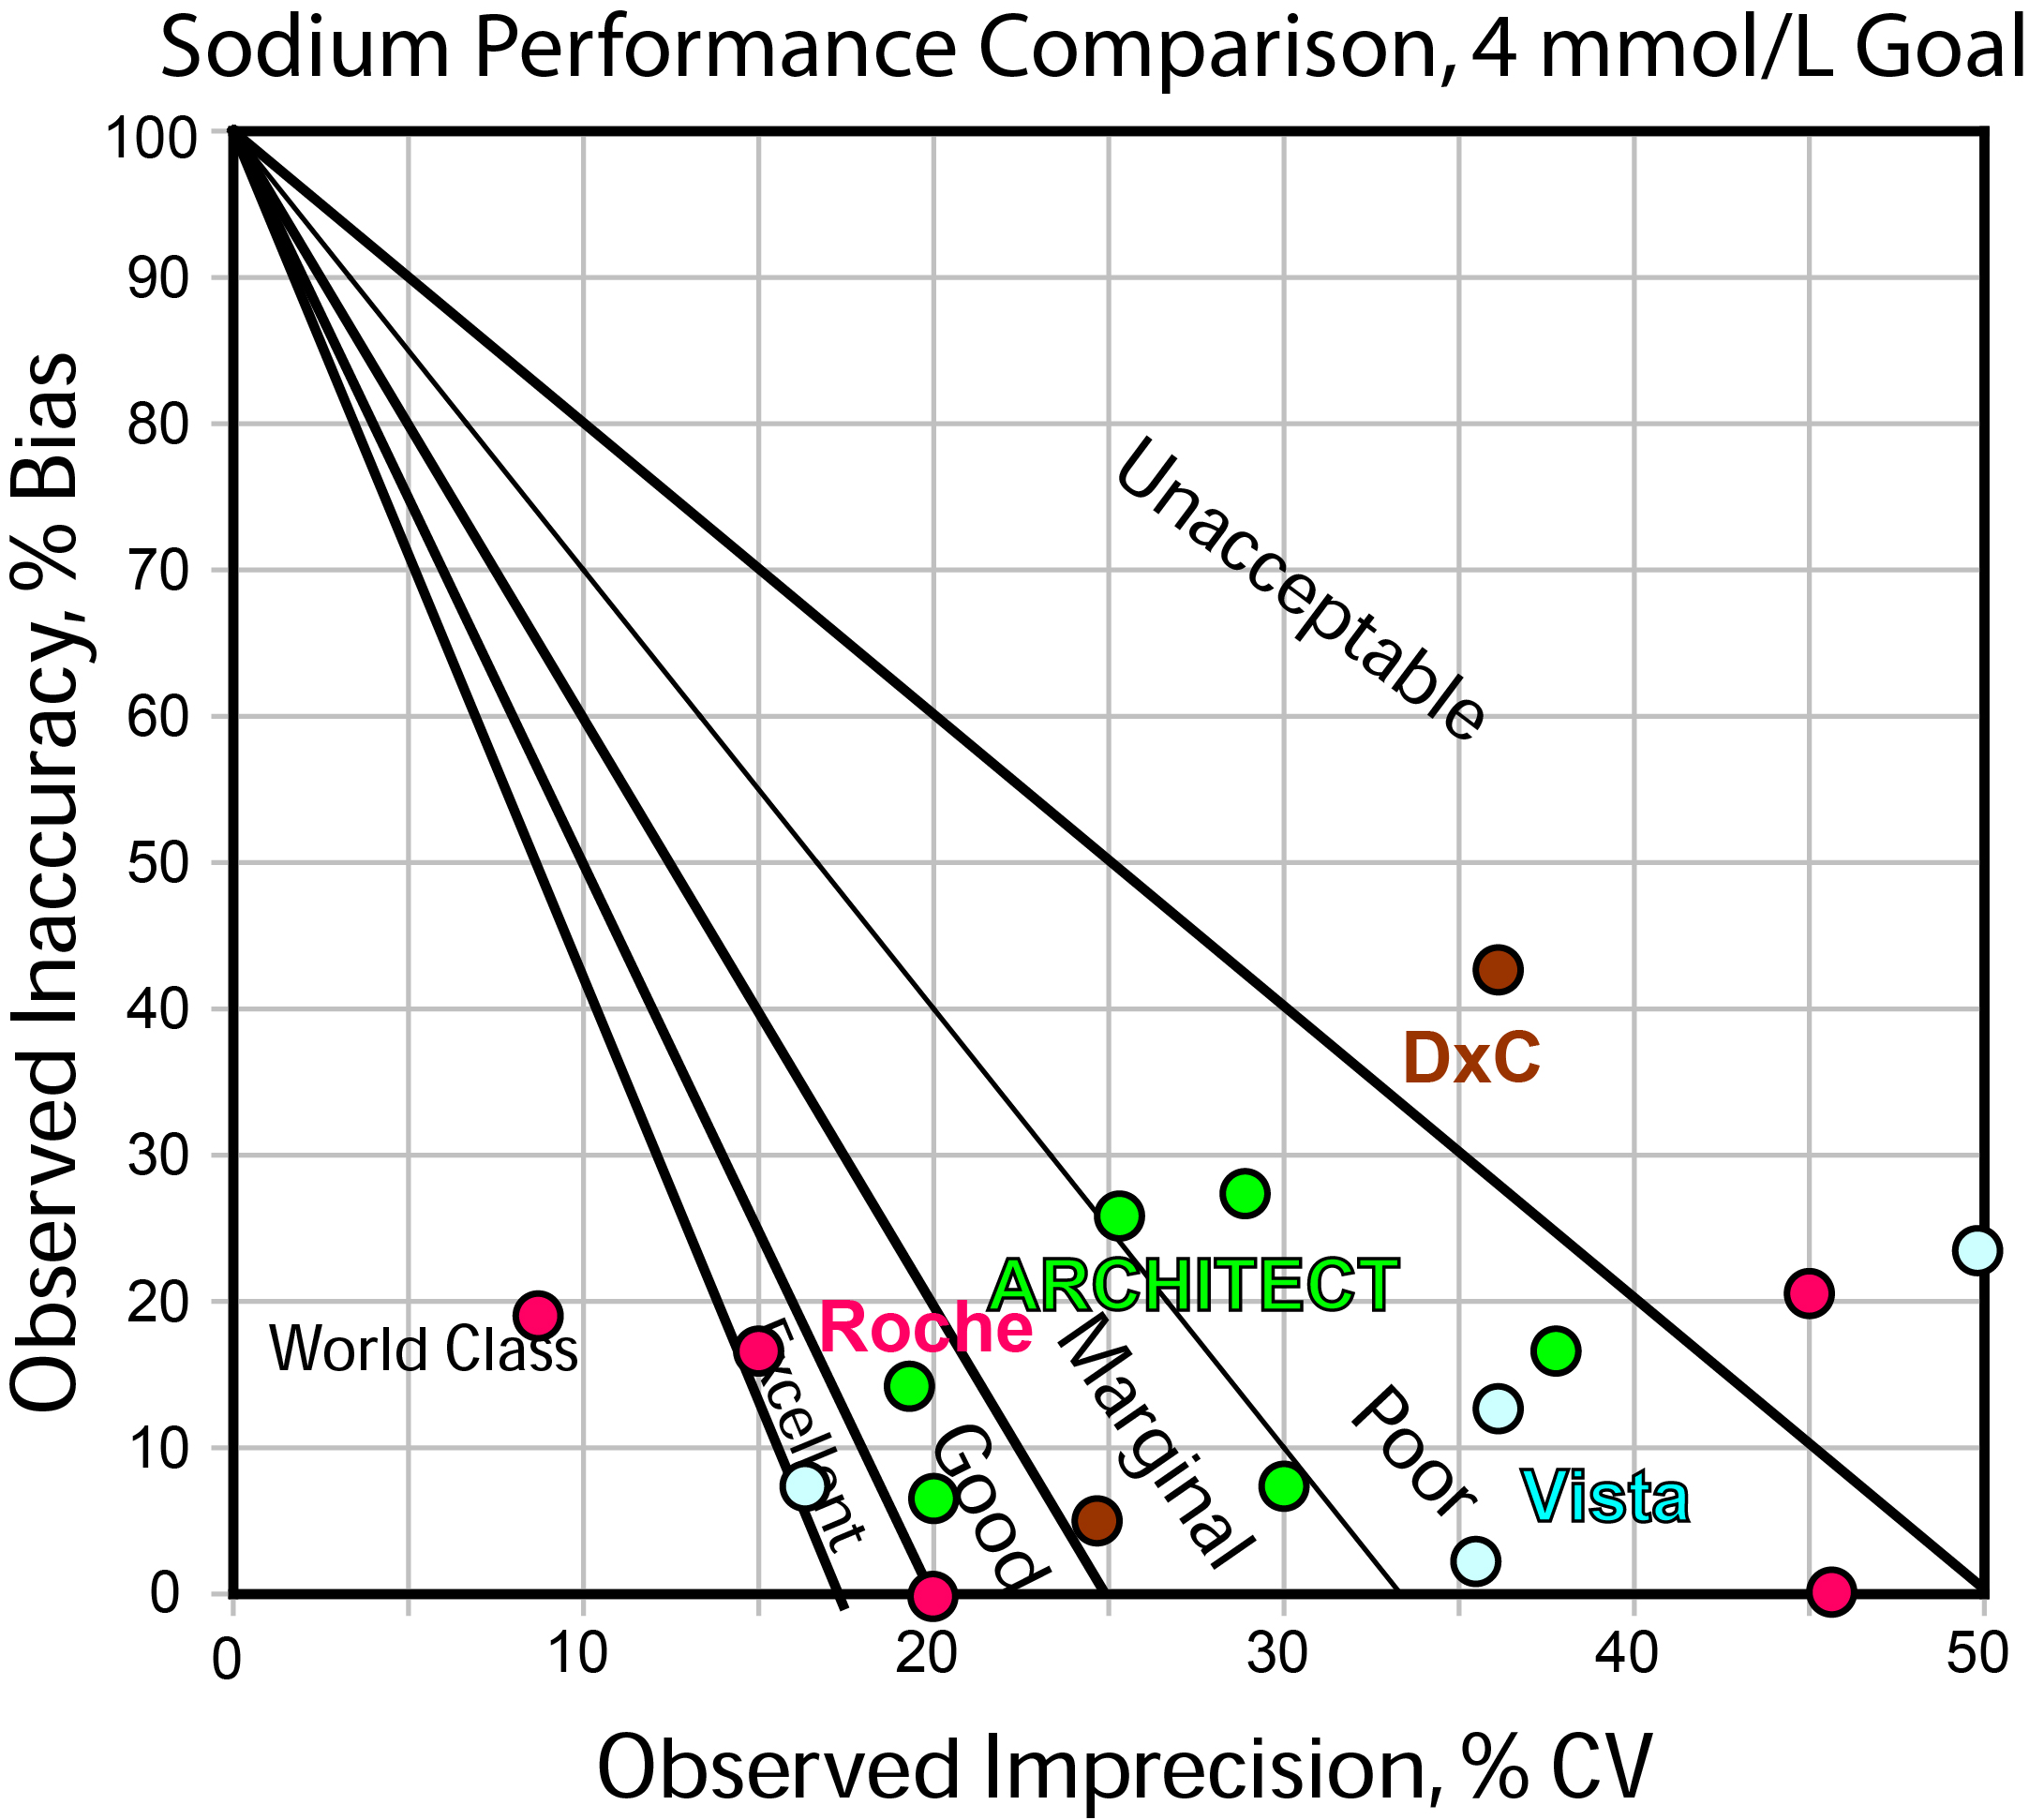 2013-Sodium-Comparison-CLIA-QR4units-NMEDx